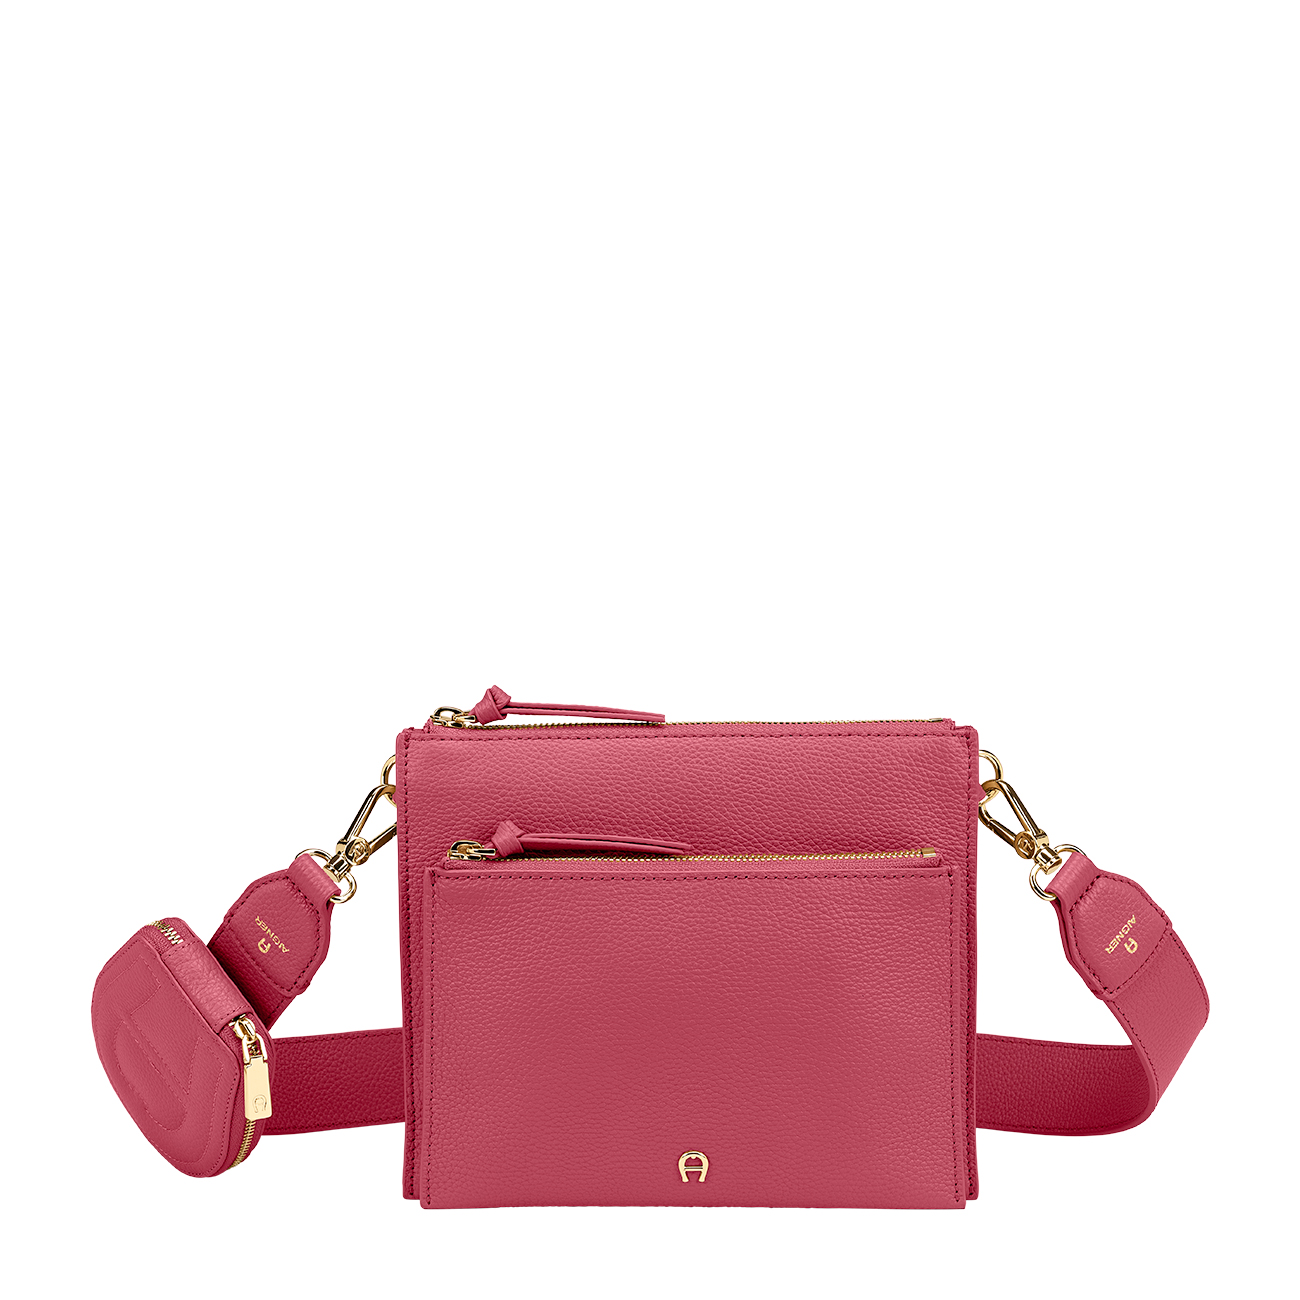 Dooney & Bourke Handbag, Saffiano Small Zip Crossbody - Ivy